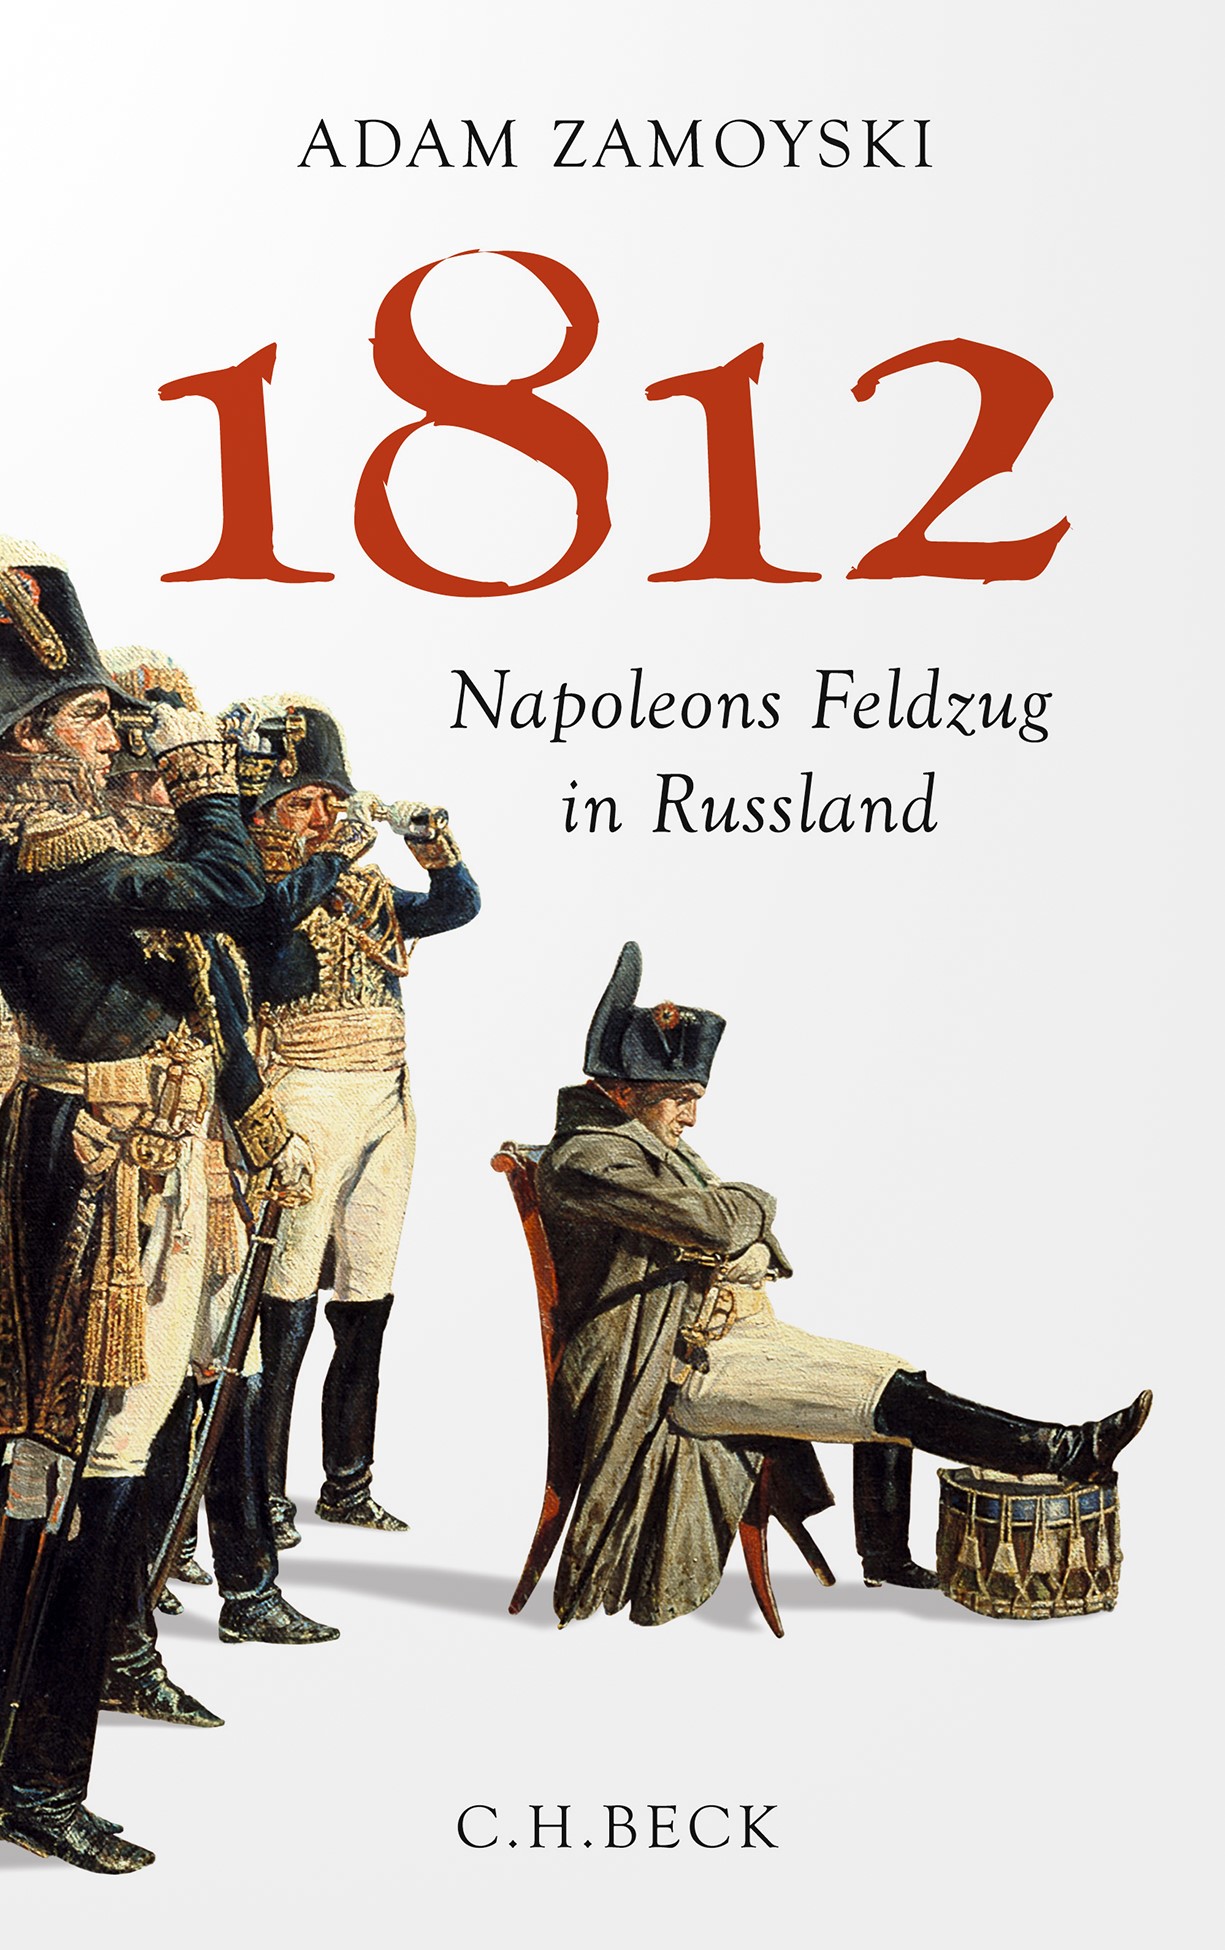 Cover: Zamoyski, Adam, 1812